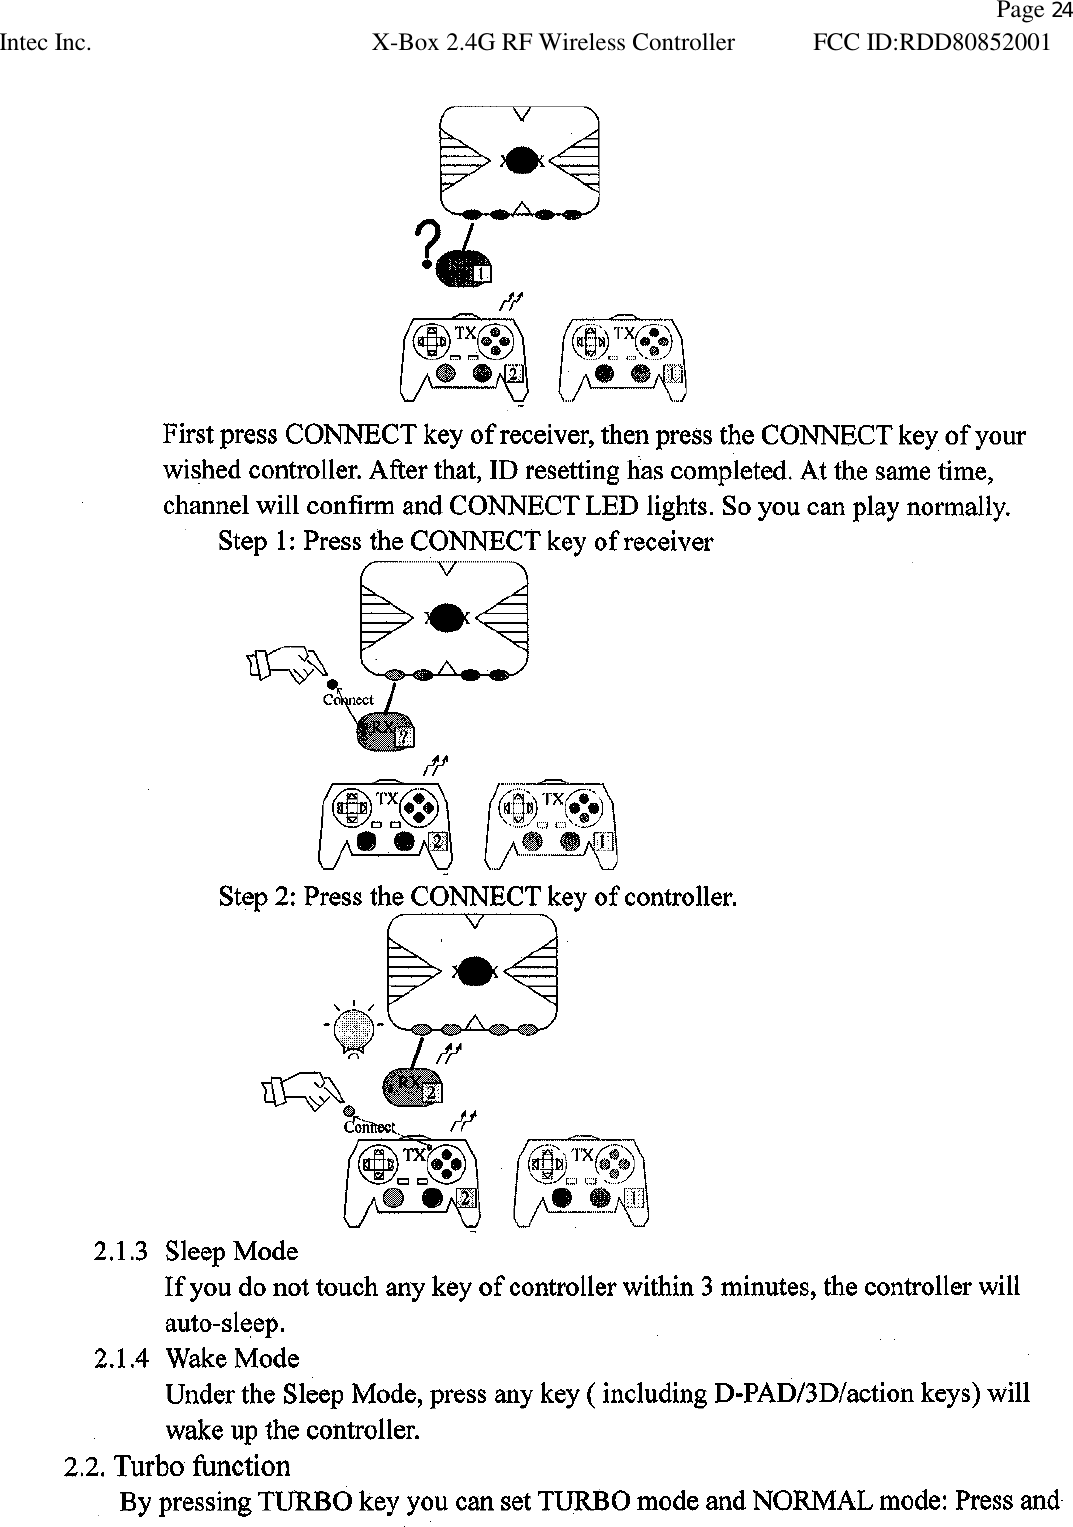                Page 24 Intec Inc. X-Box 2.4G RF Wireless Controller FCC ID:RDD80852001   